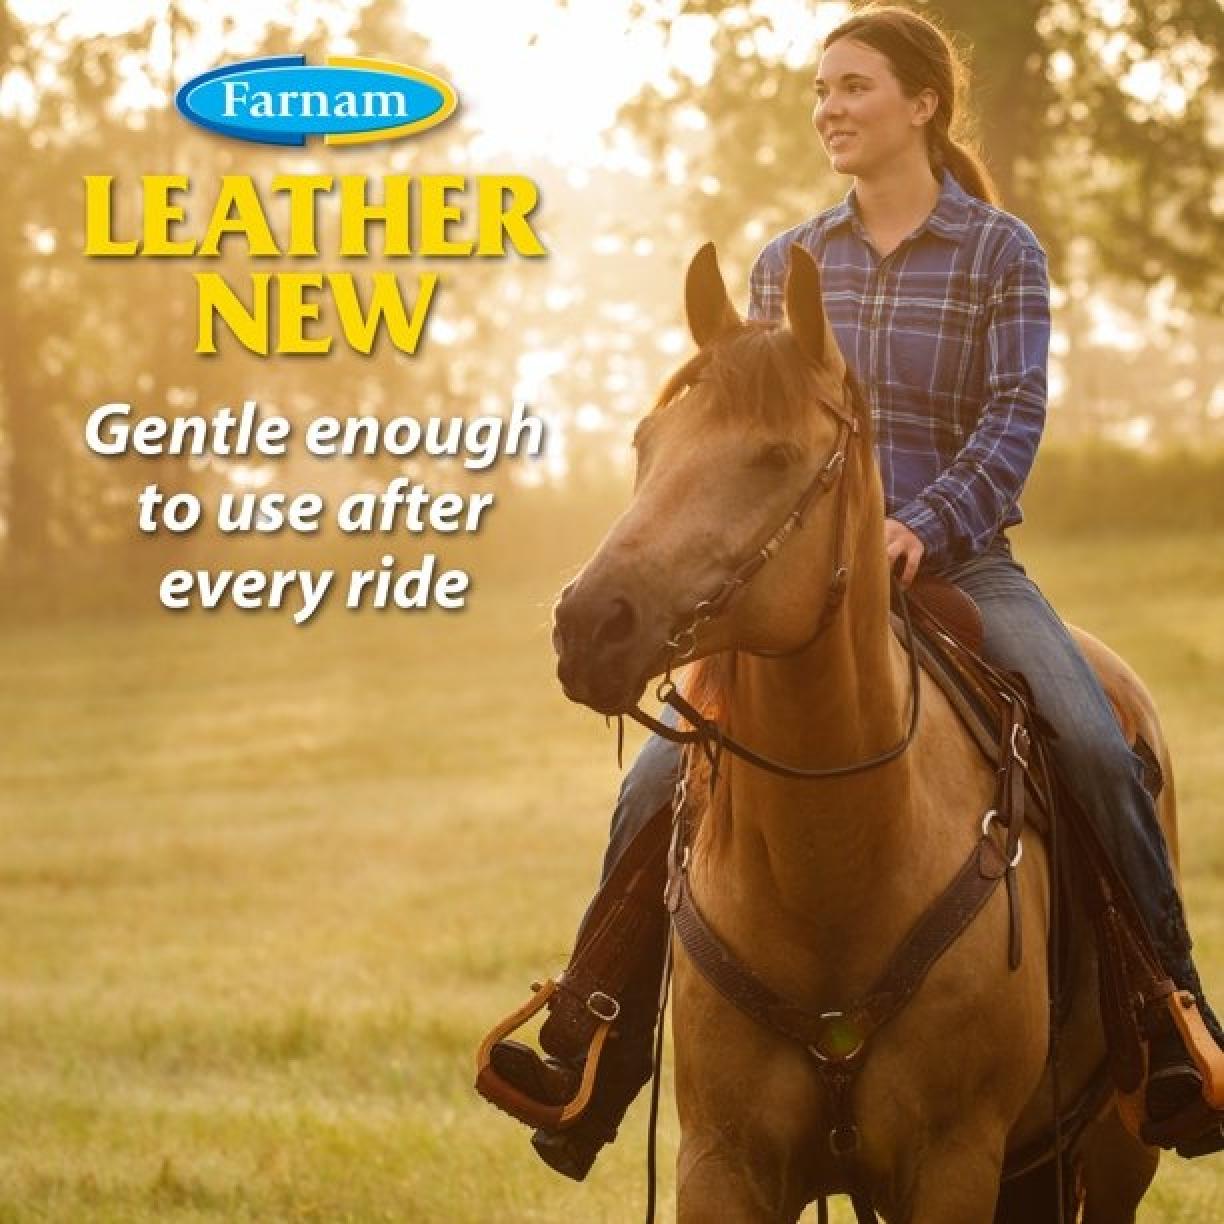 Farnam Leather New Easy-Polishing Glycerine Saddle Soap